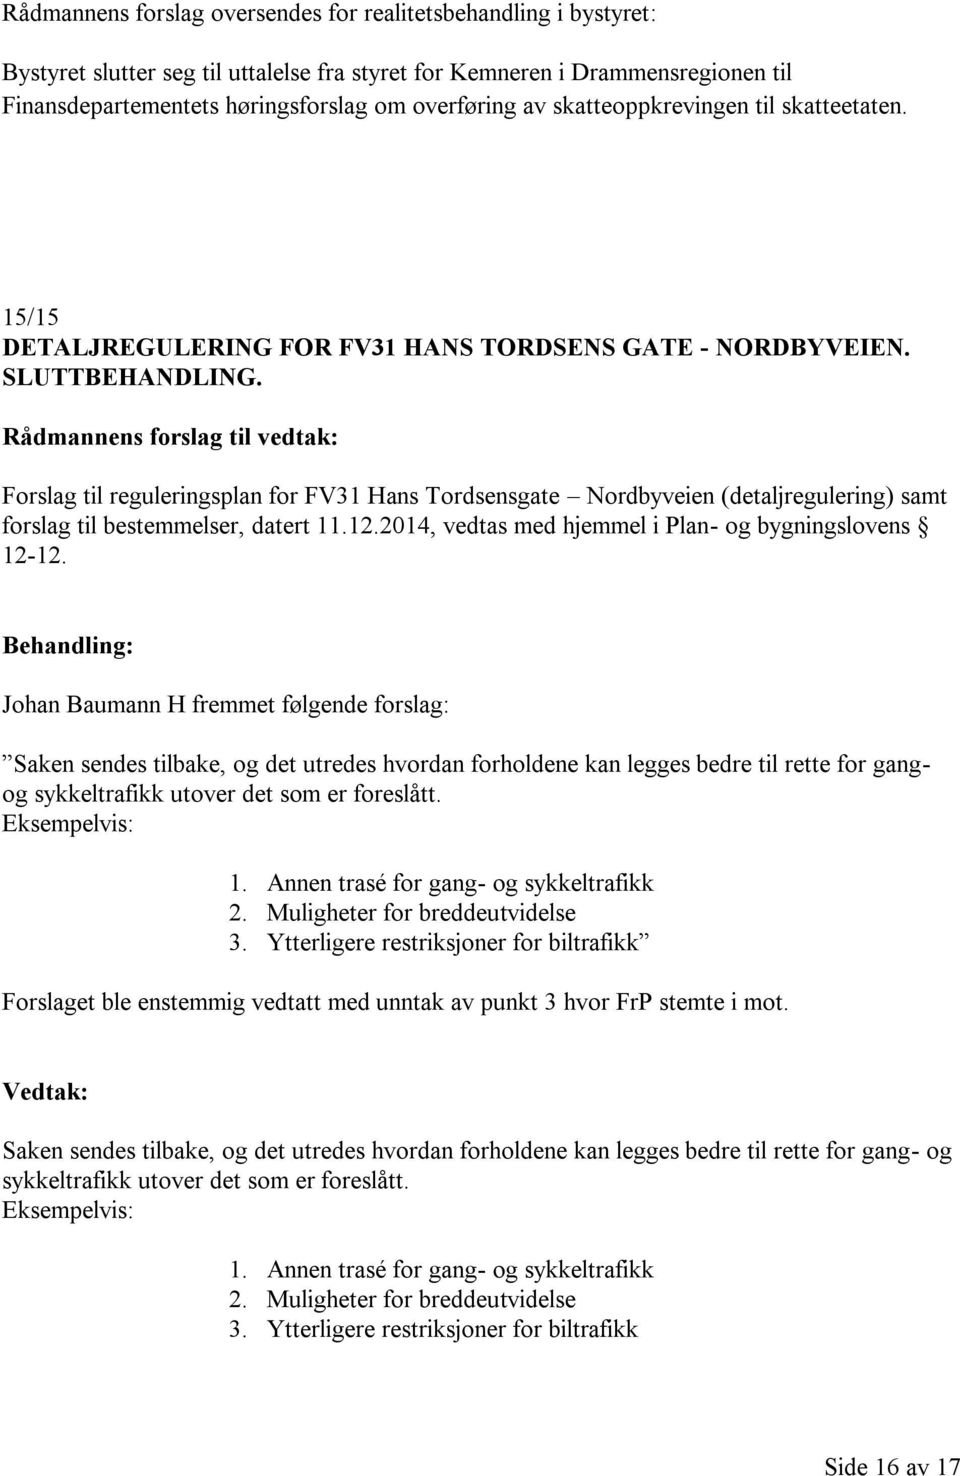 Forslag til reguleringsplan for FV31 Hans Tordsensgate Nordbyveien (detaljregulering) samt forslag til bestemmelser, datert 11.12.2014, vedtas med hjemmel i Plan- og bygningslovens 12-12.